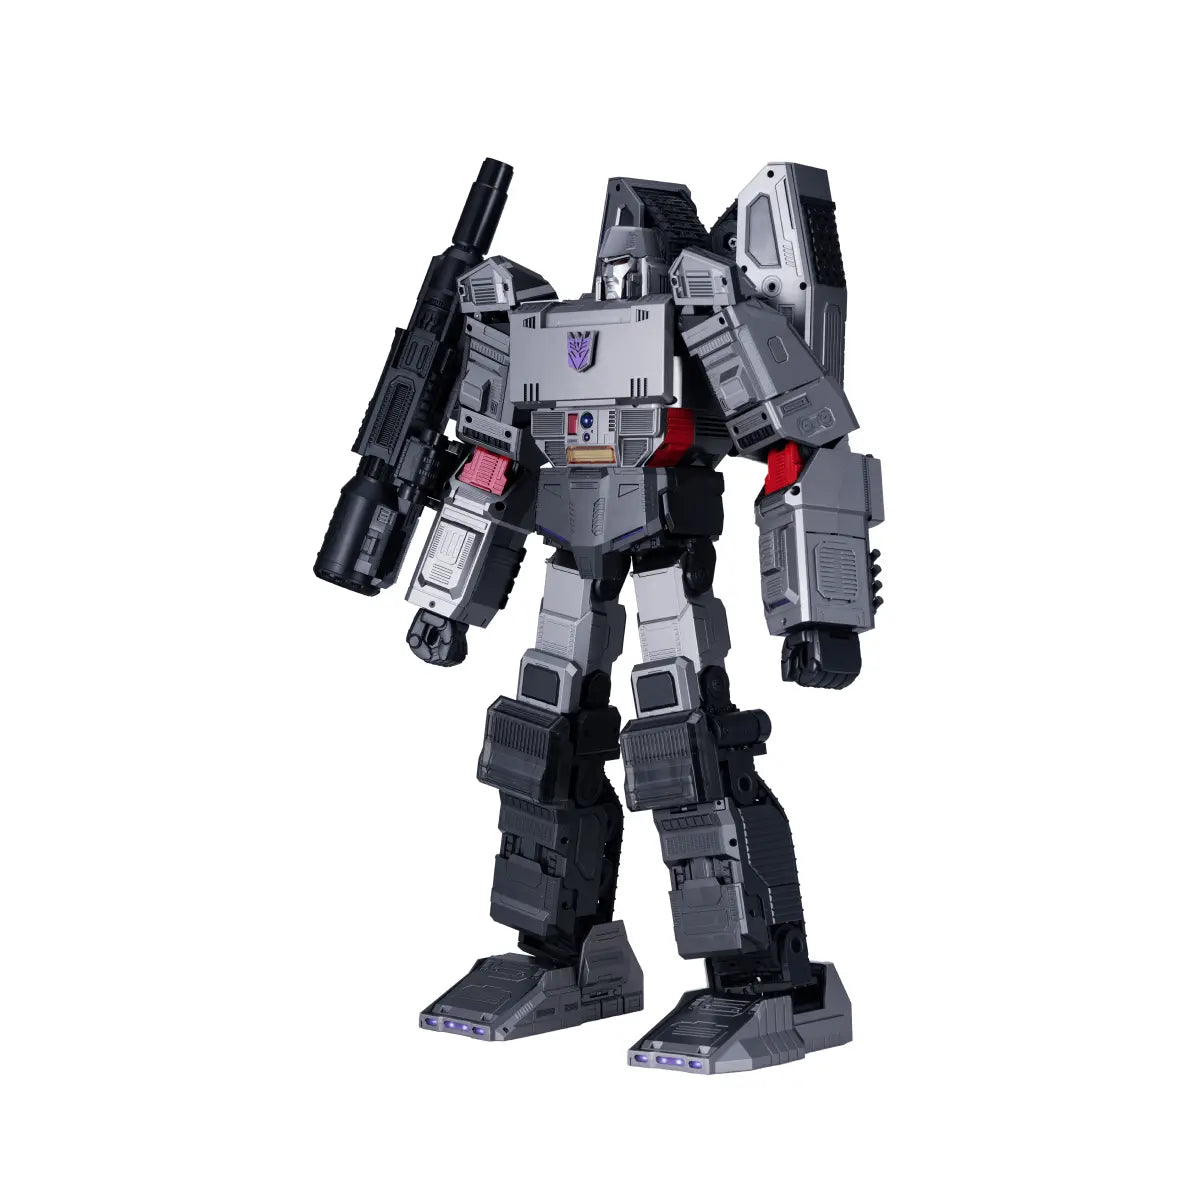 Robosen Transformers Megatron Flagship Limited Edition Auto-Converting Robot Figure